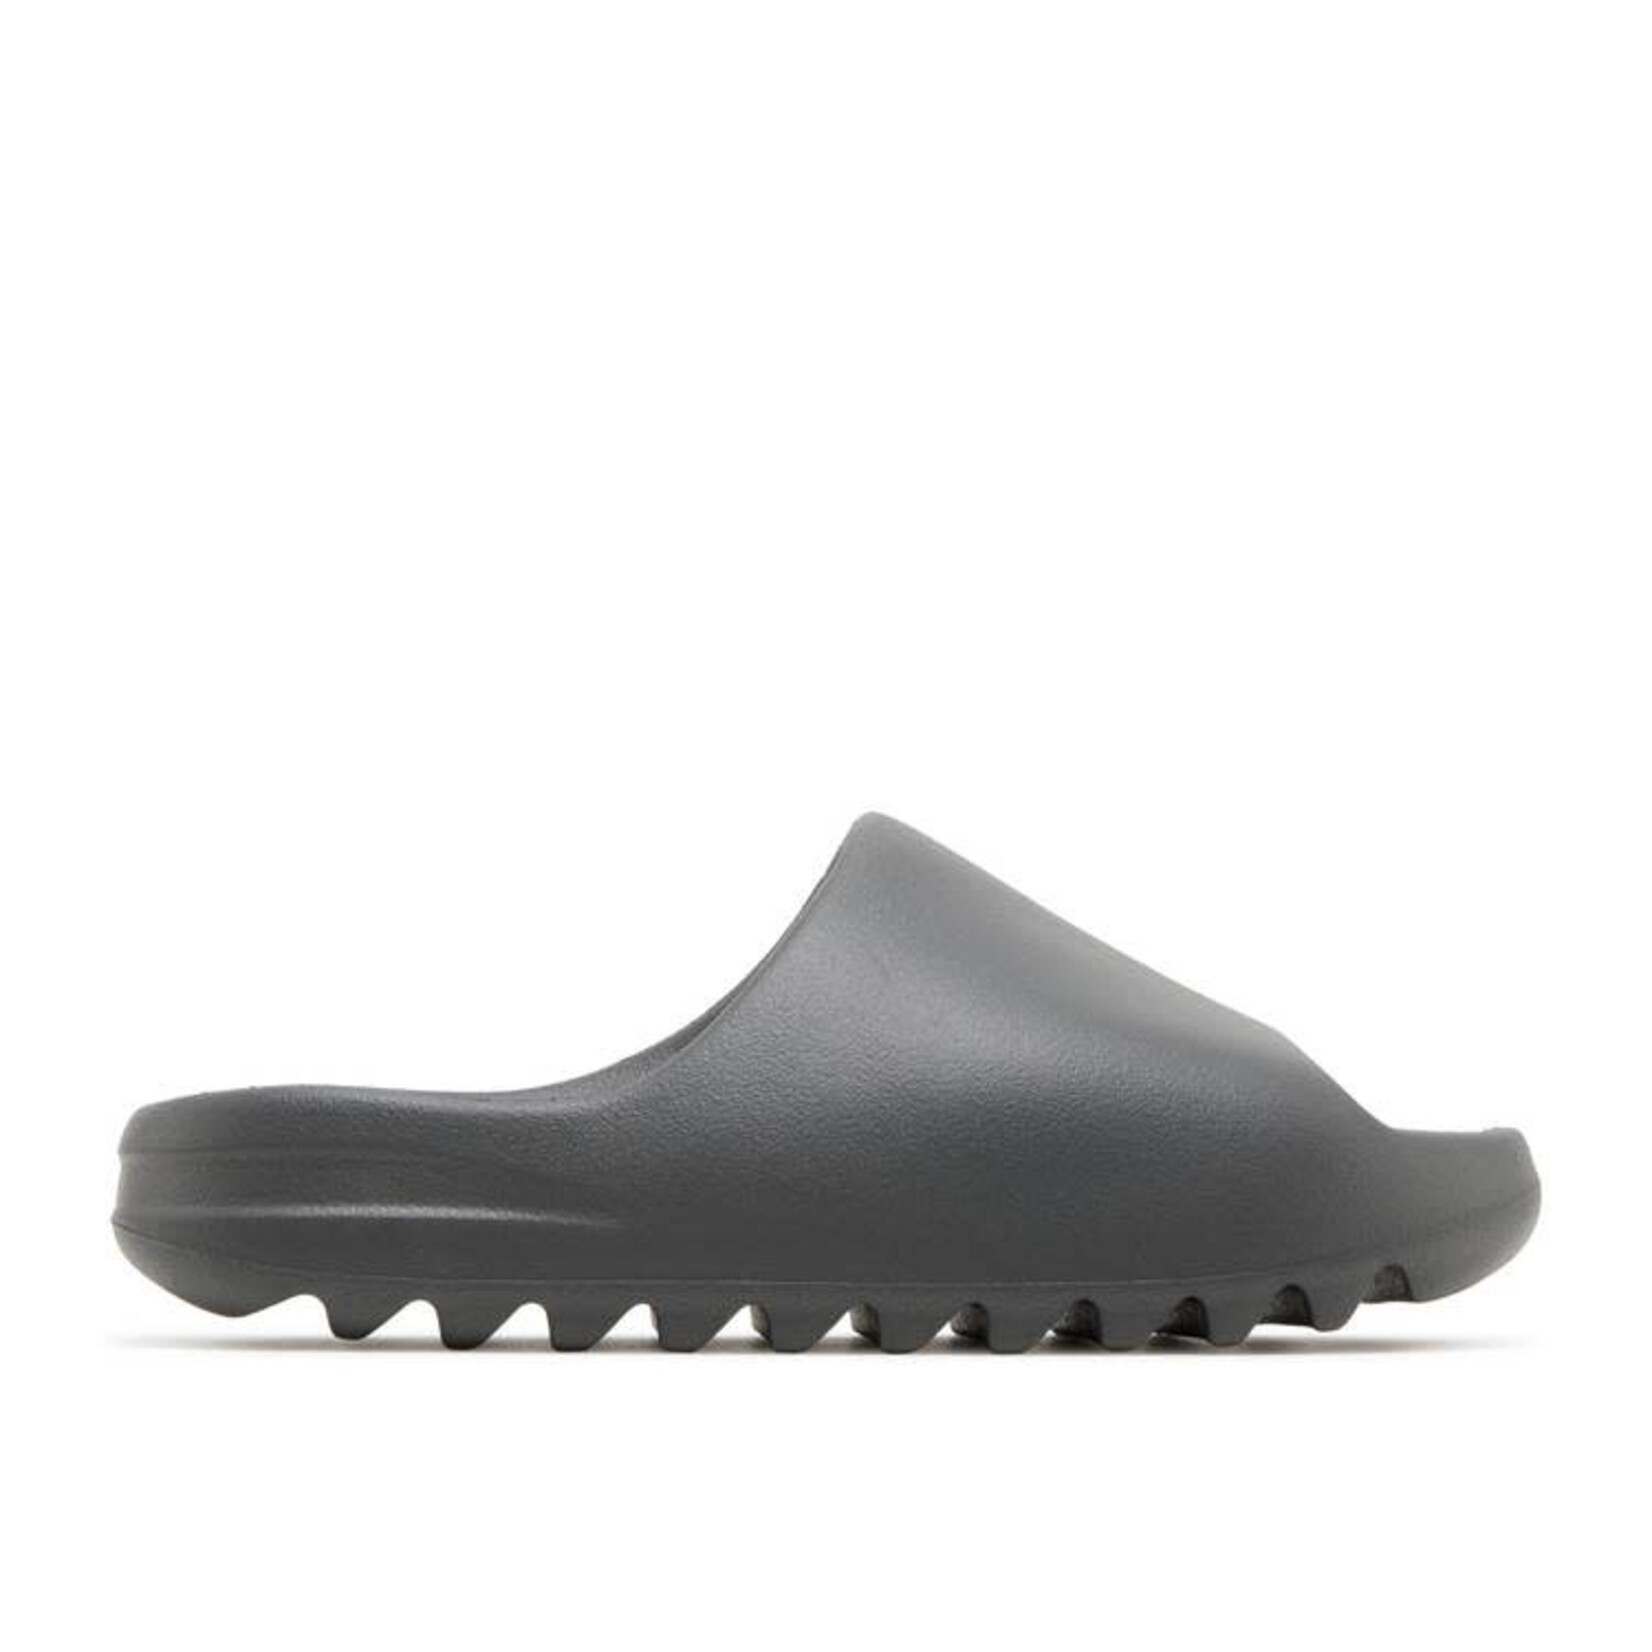 Adidas adidas Yeezy Slide Granite Size 9, DS BRAND NEW